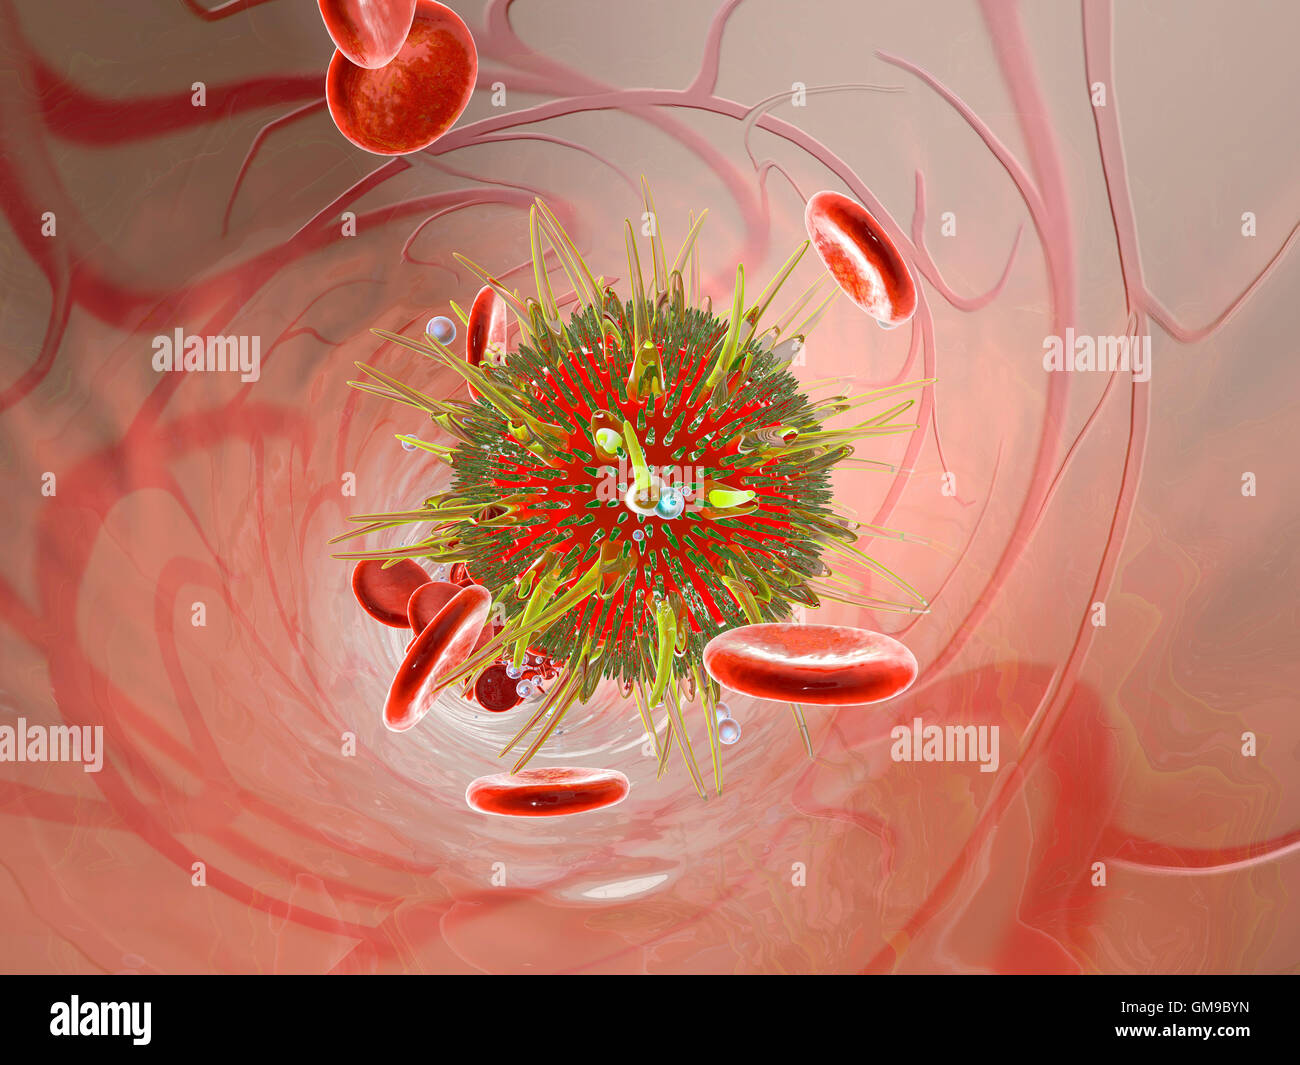 Virus in bloodstream, 3D Rendering Stock Photo